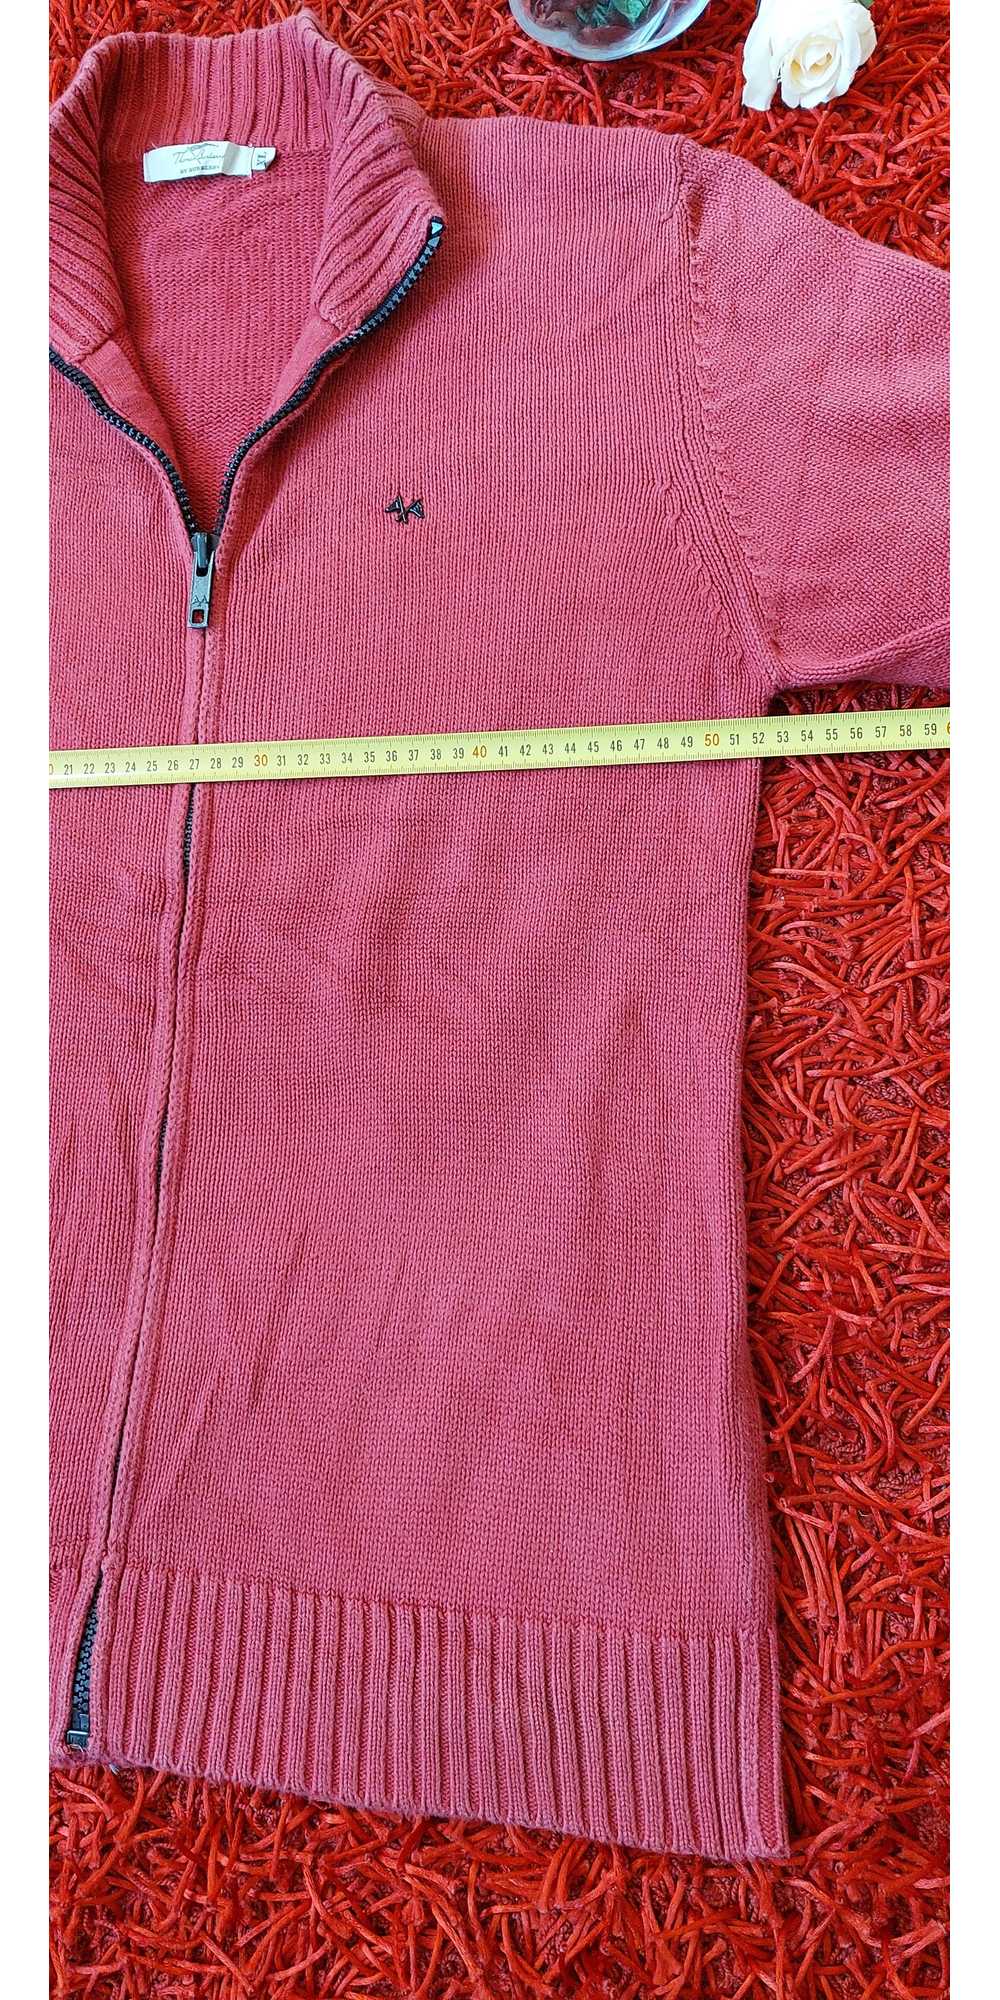 Burberry Thomas Burberrys Sweatshirt Red Size XL - image 7